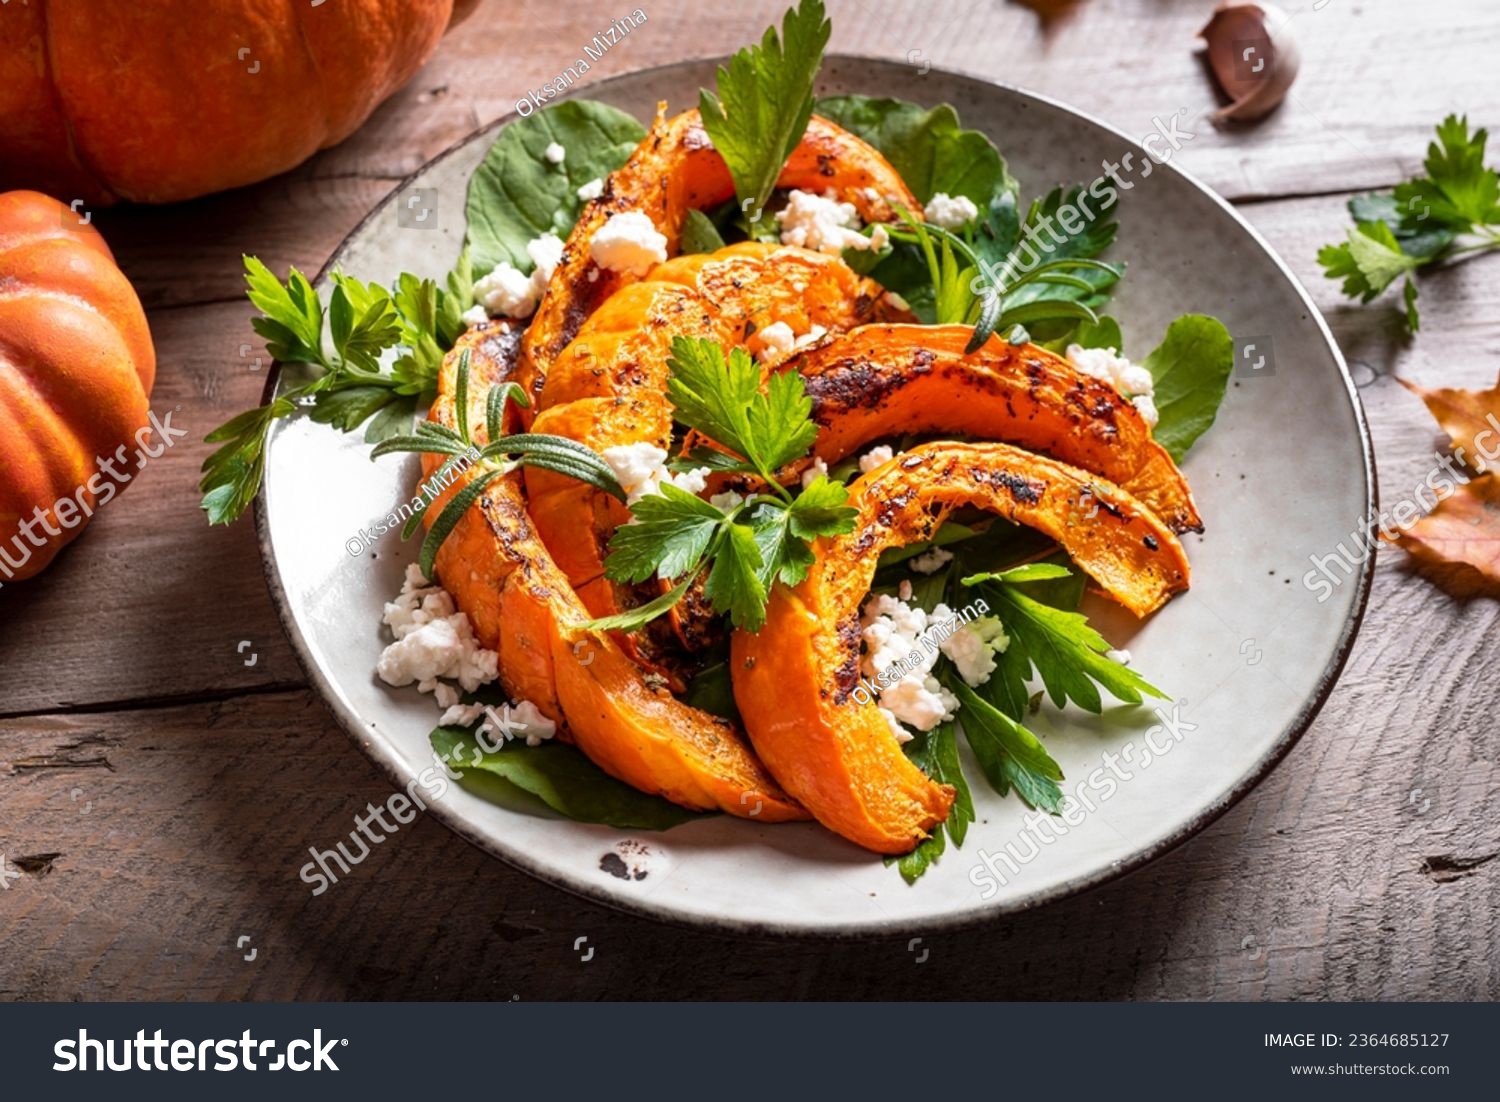 Autumn salad with grilled pumpkin, goat cheese and herbs close up. Seasonal autumn warm salad recipe, vegetarian food. #2364685127